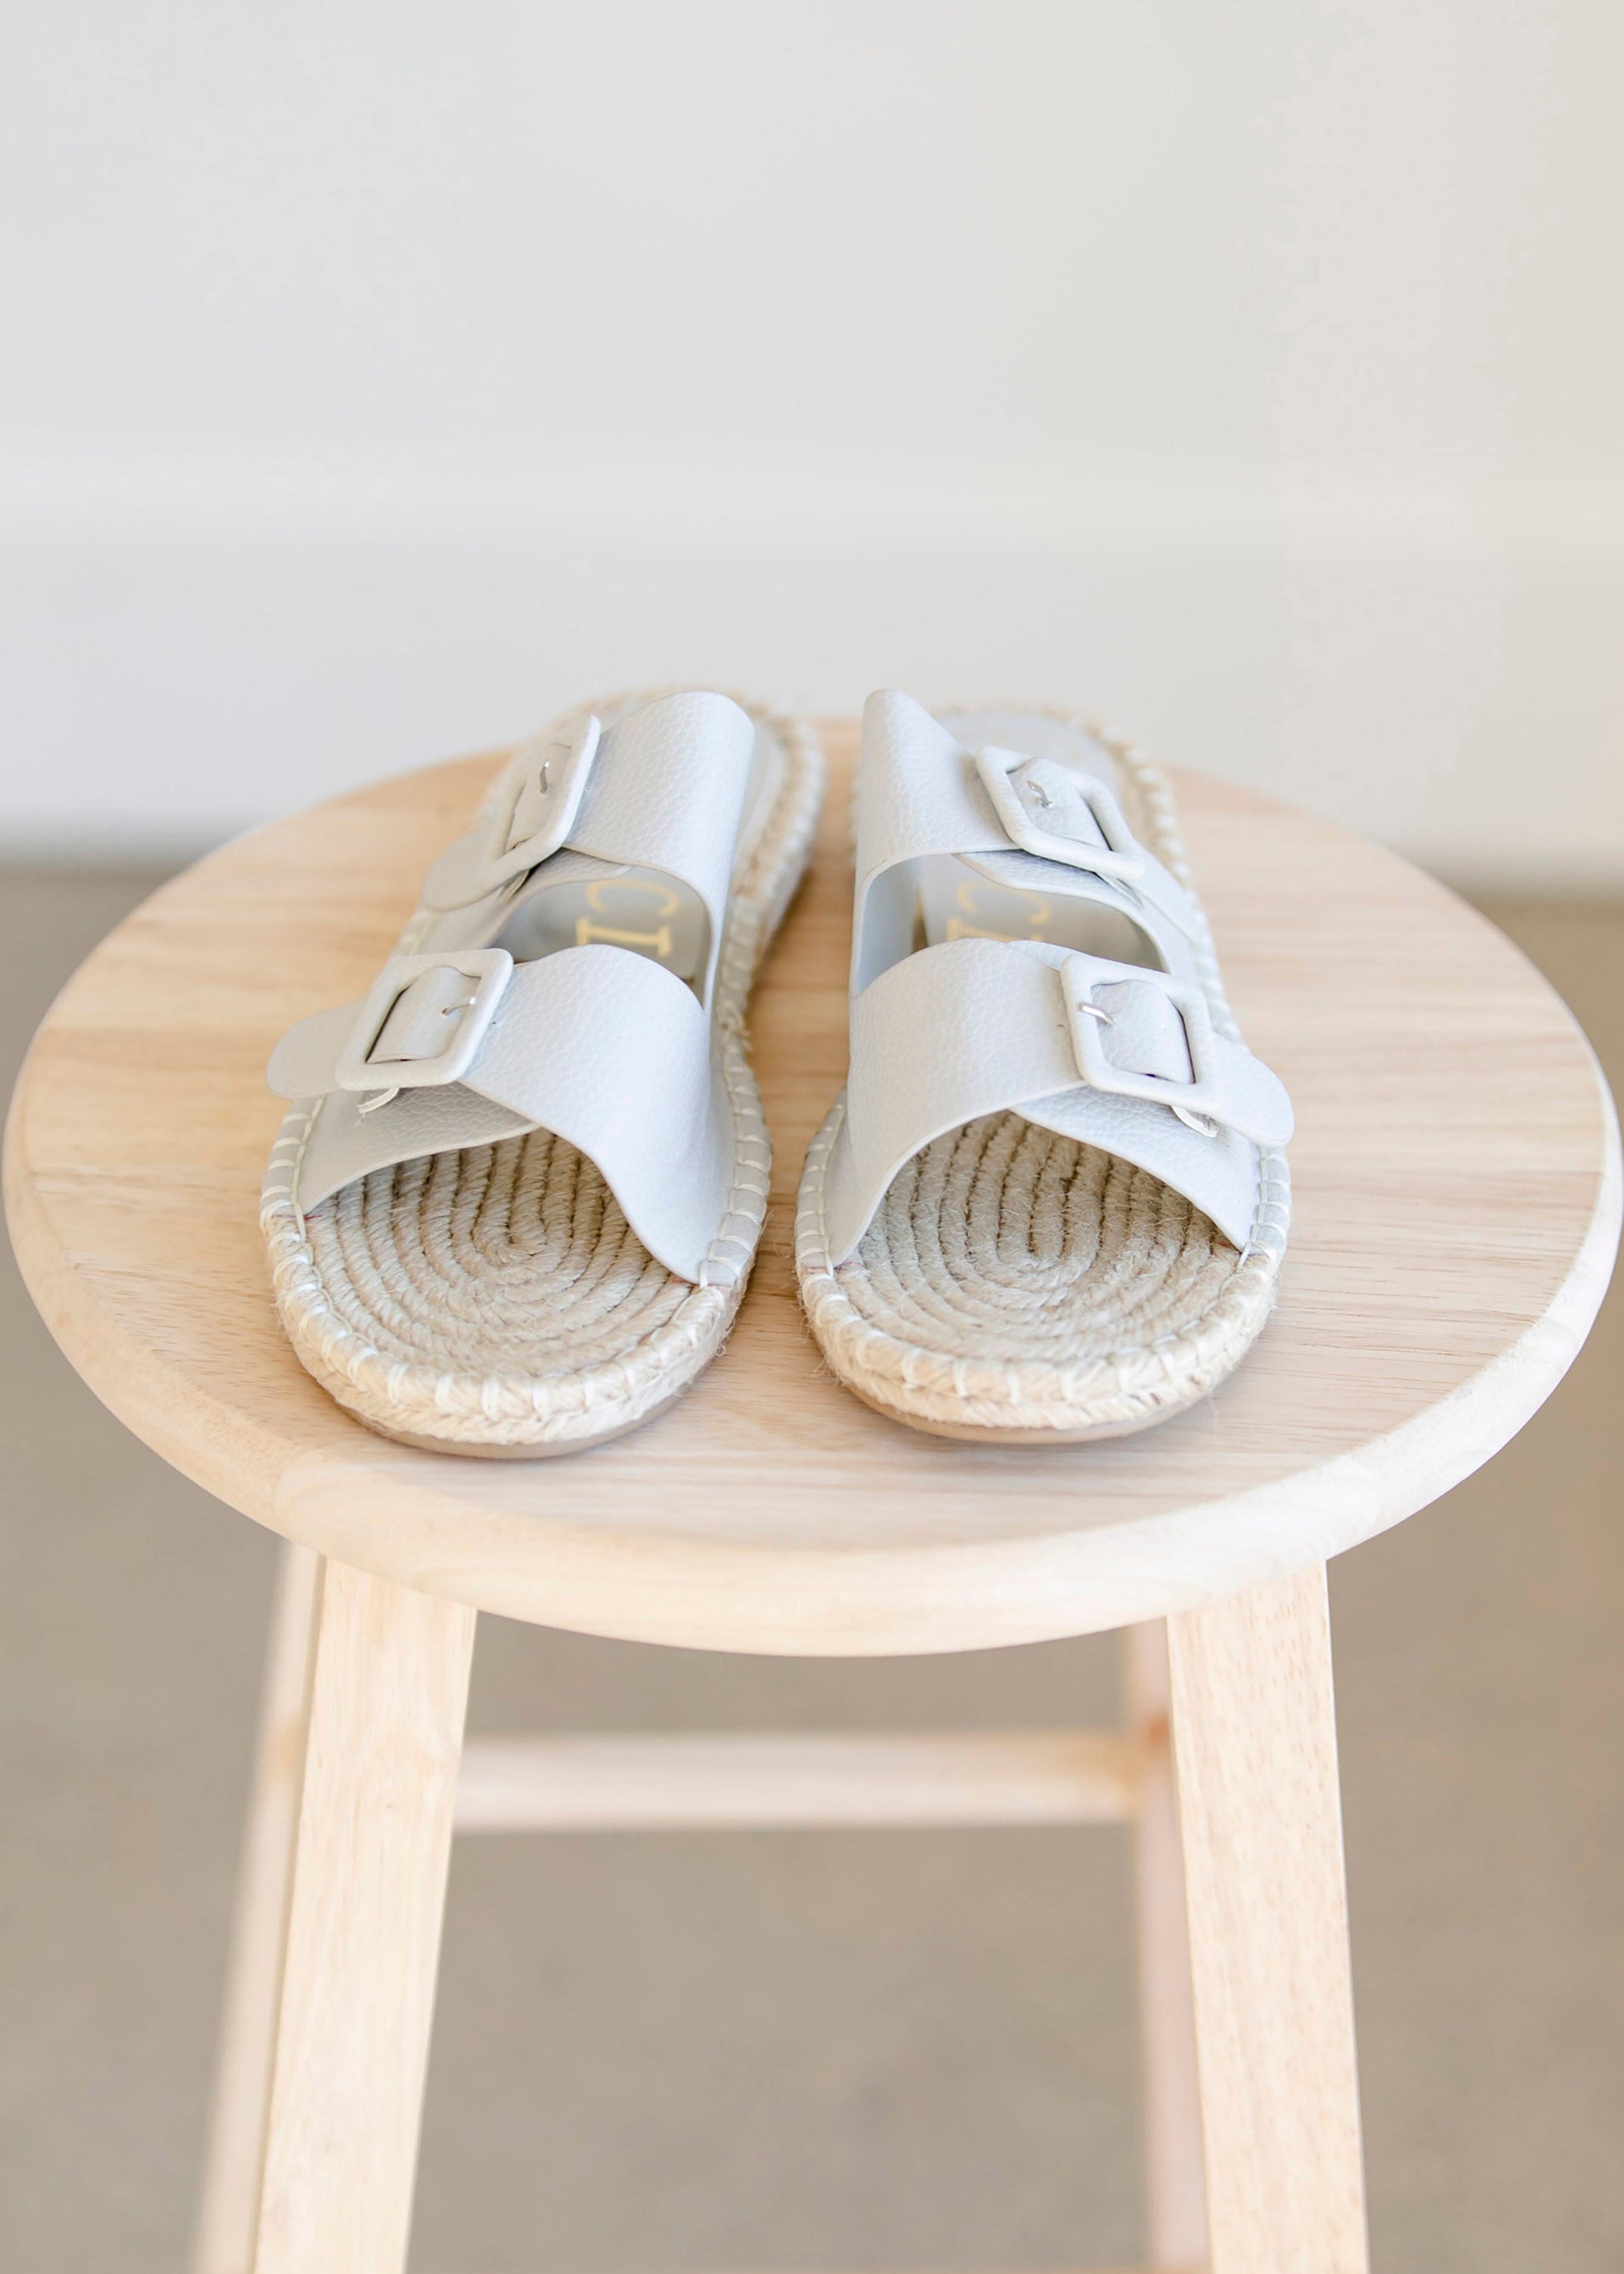 Open Toe Rope Sole Sandal - FINAL SALE Shoes Light Gray / 5.5